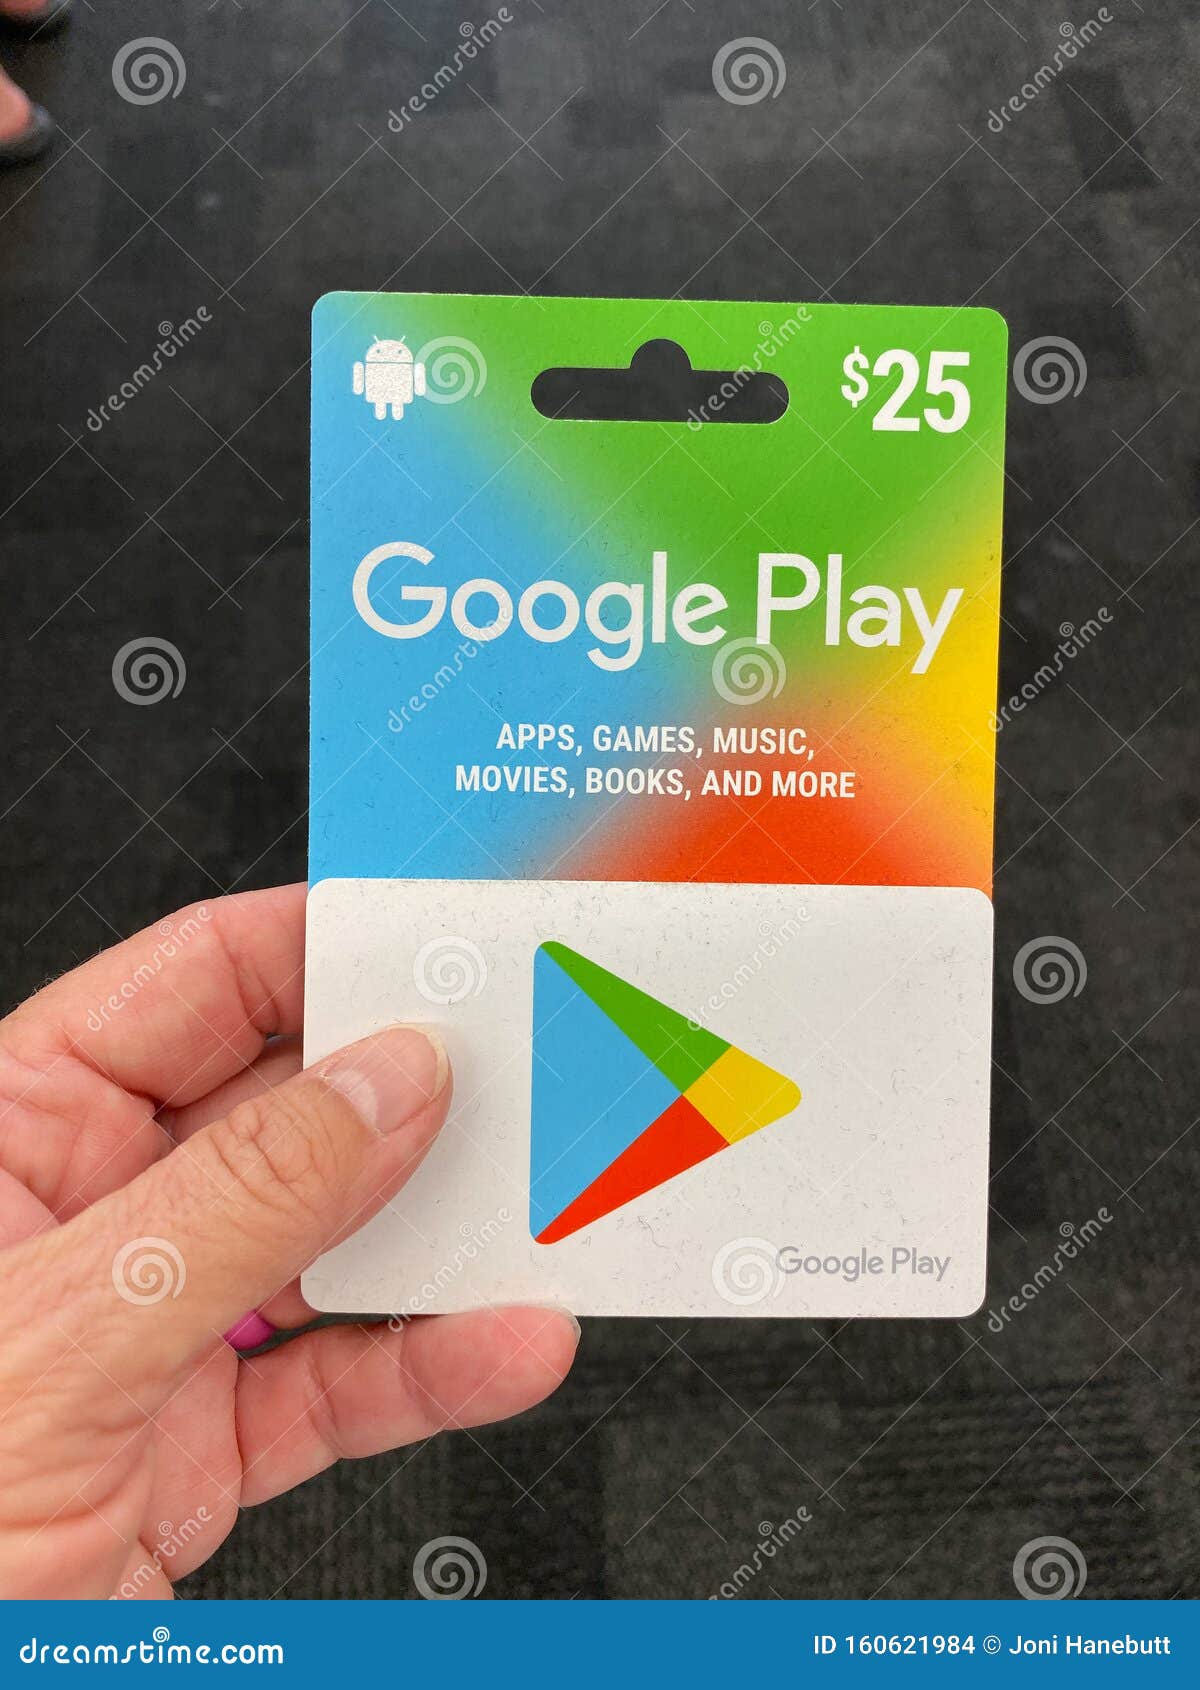 How Do I Buy Google Play Gift Card Online 